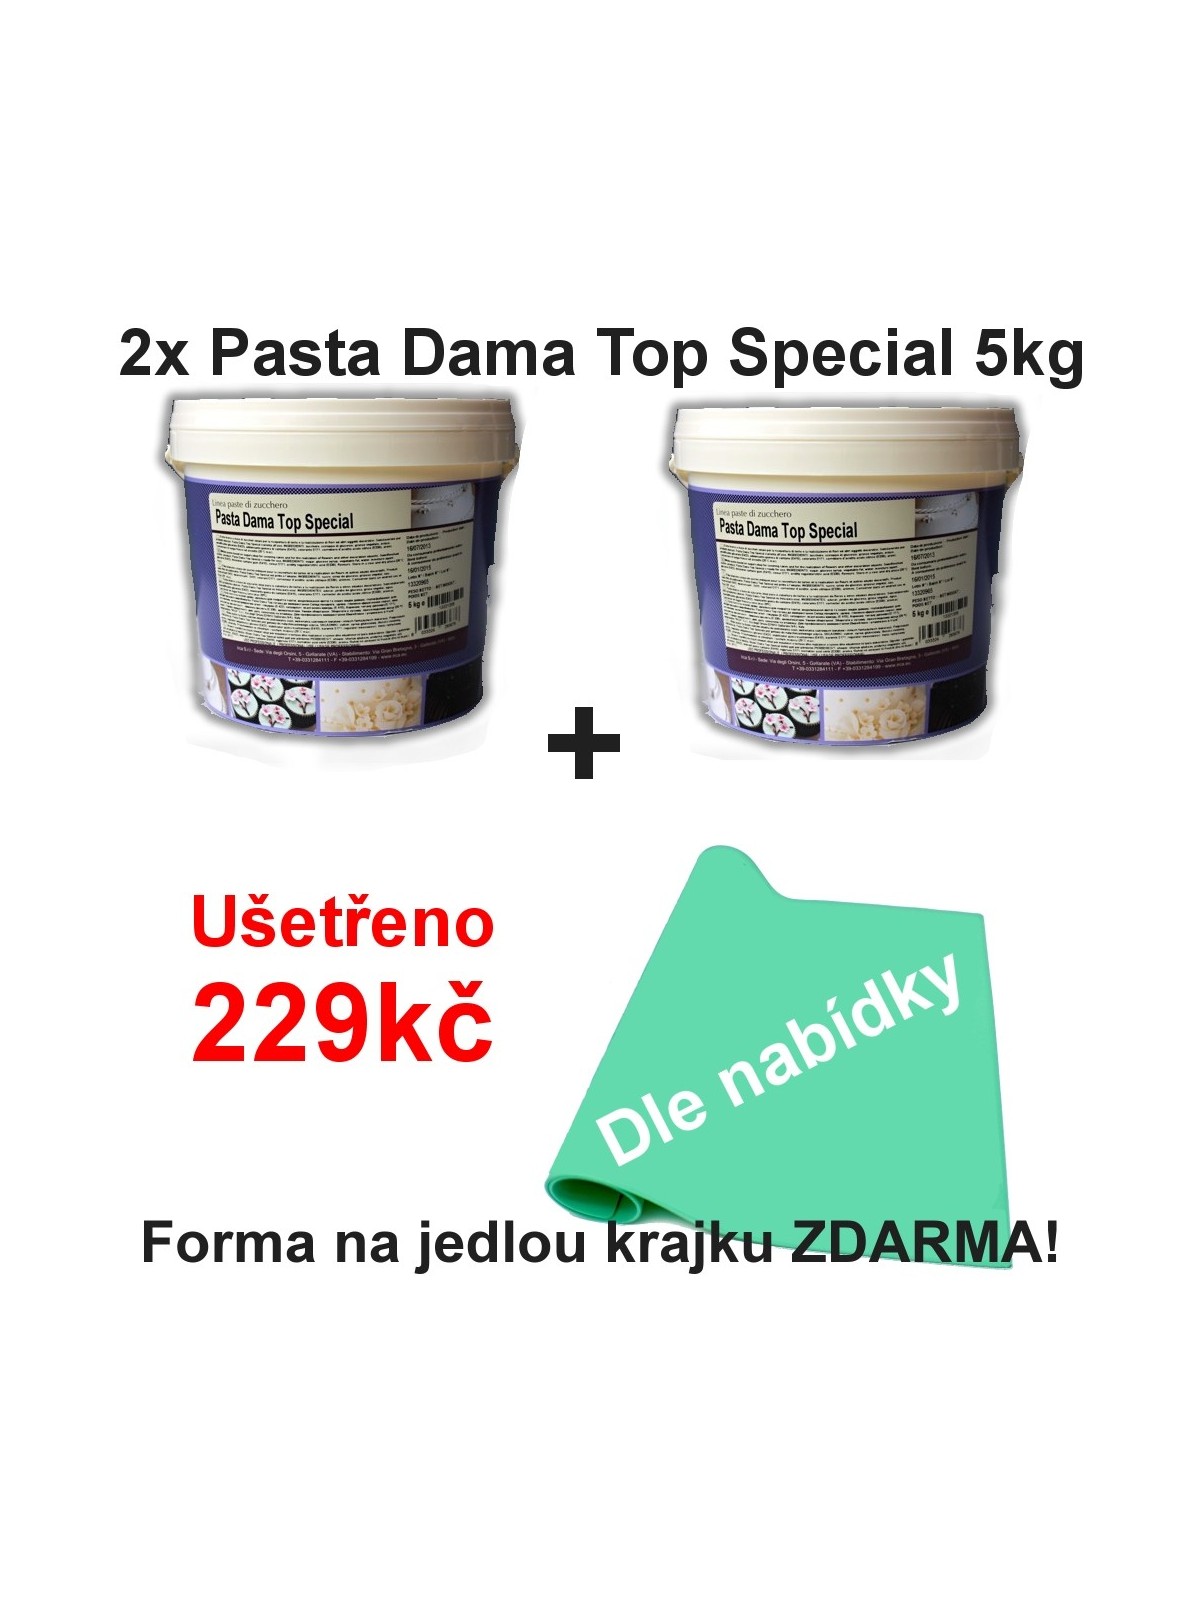 2x Pasta Dama TOP Special - 5kg + krajka zdarma